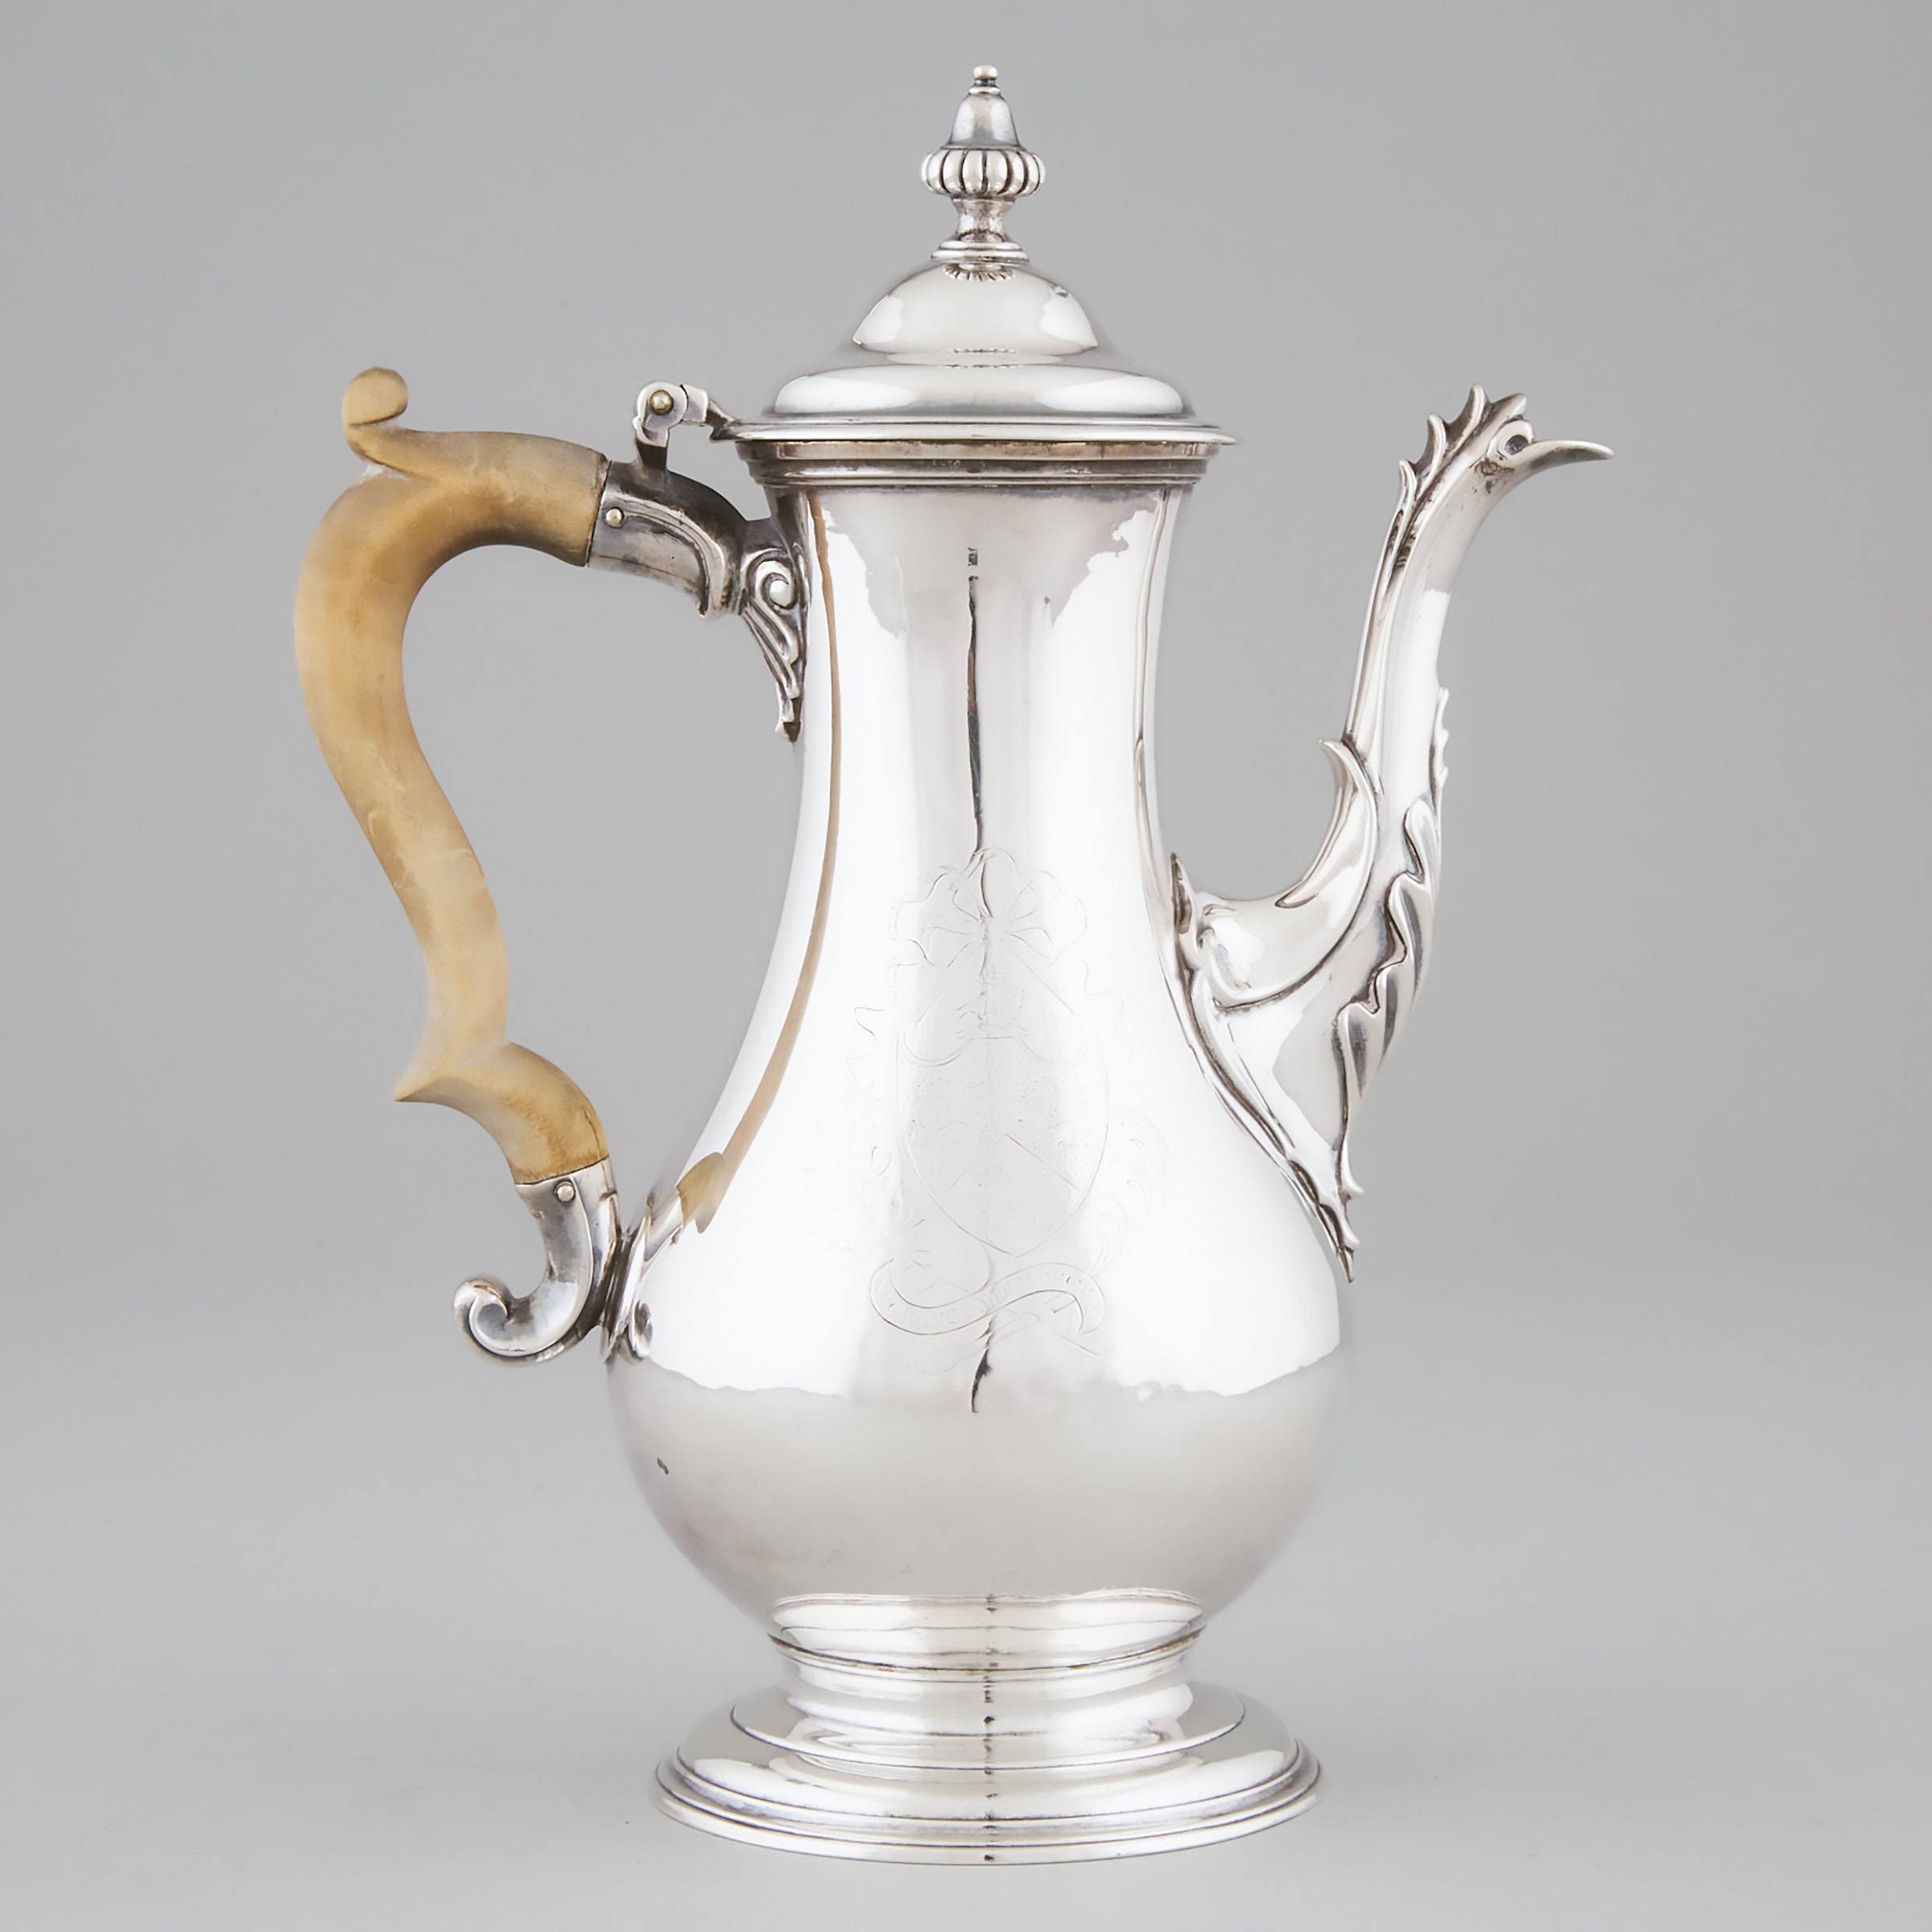 George III Silver Baluster Coffee Pot, Charles Wright, London, 1775